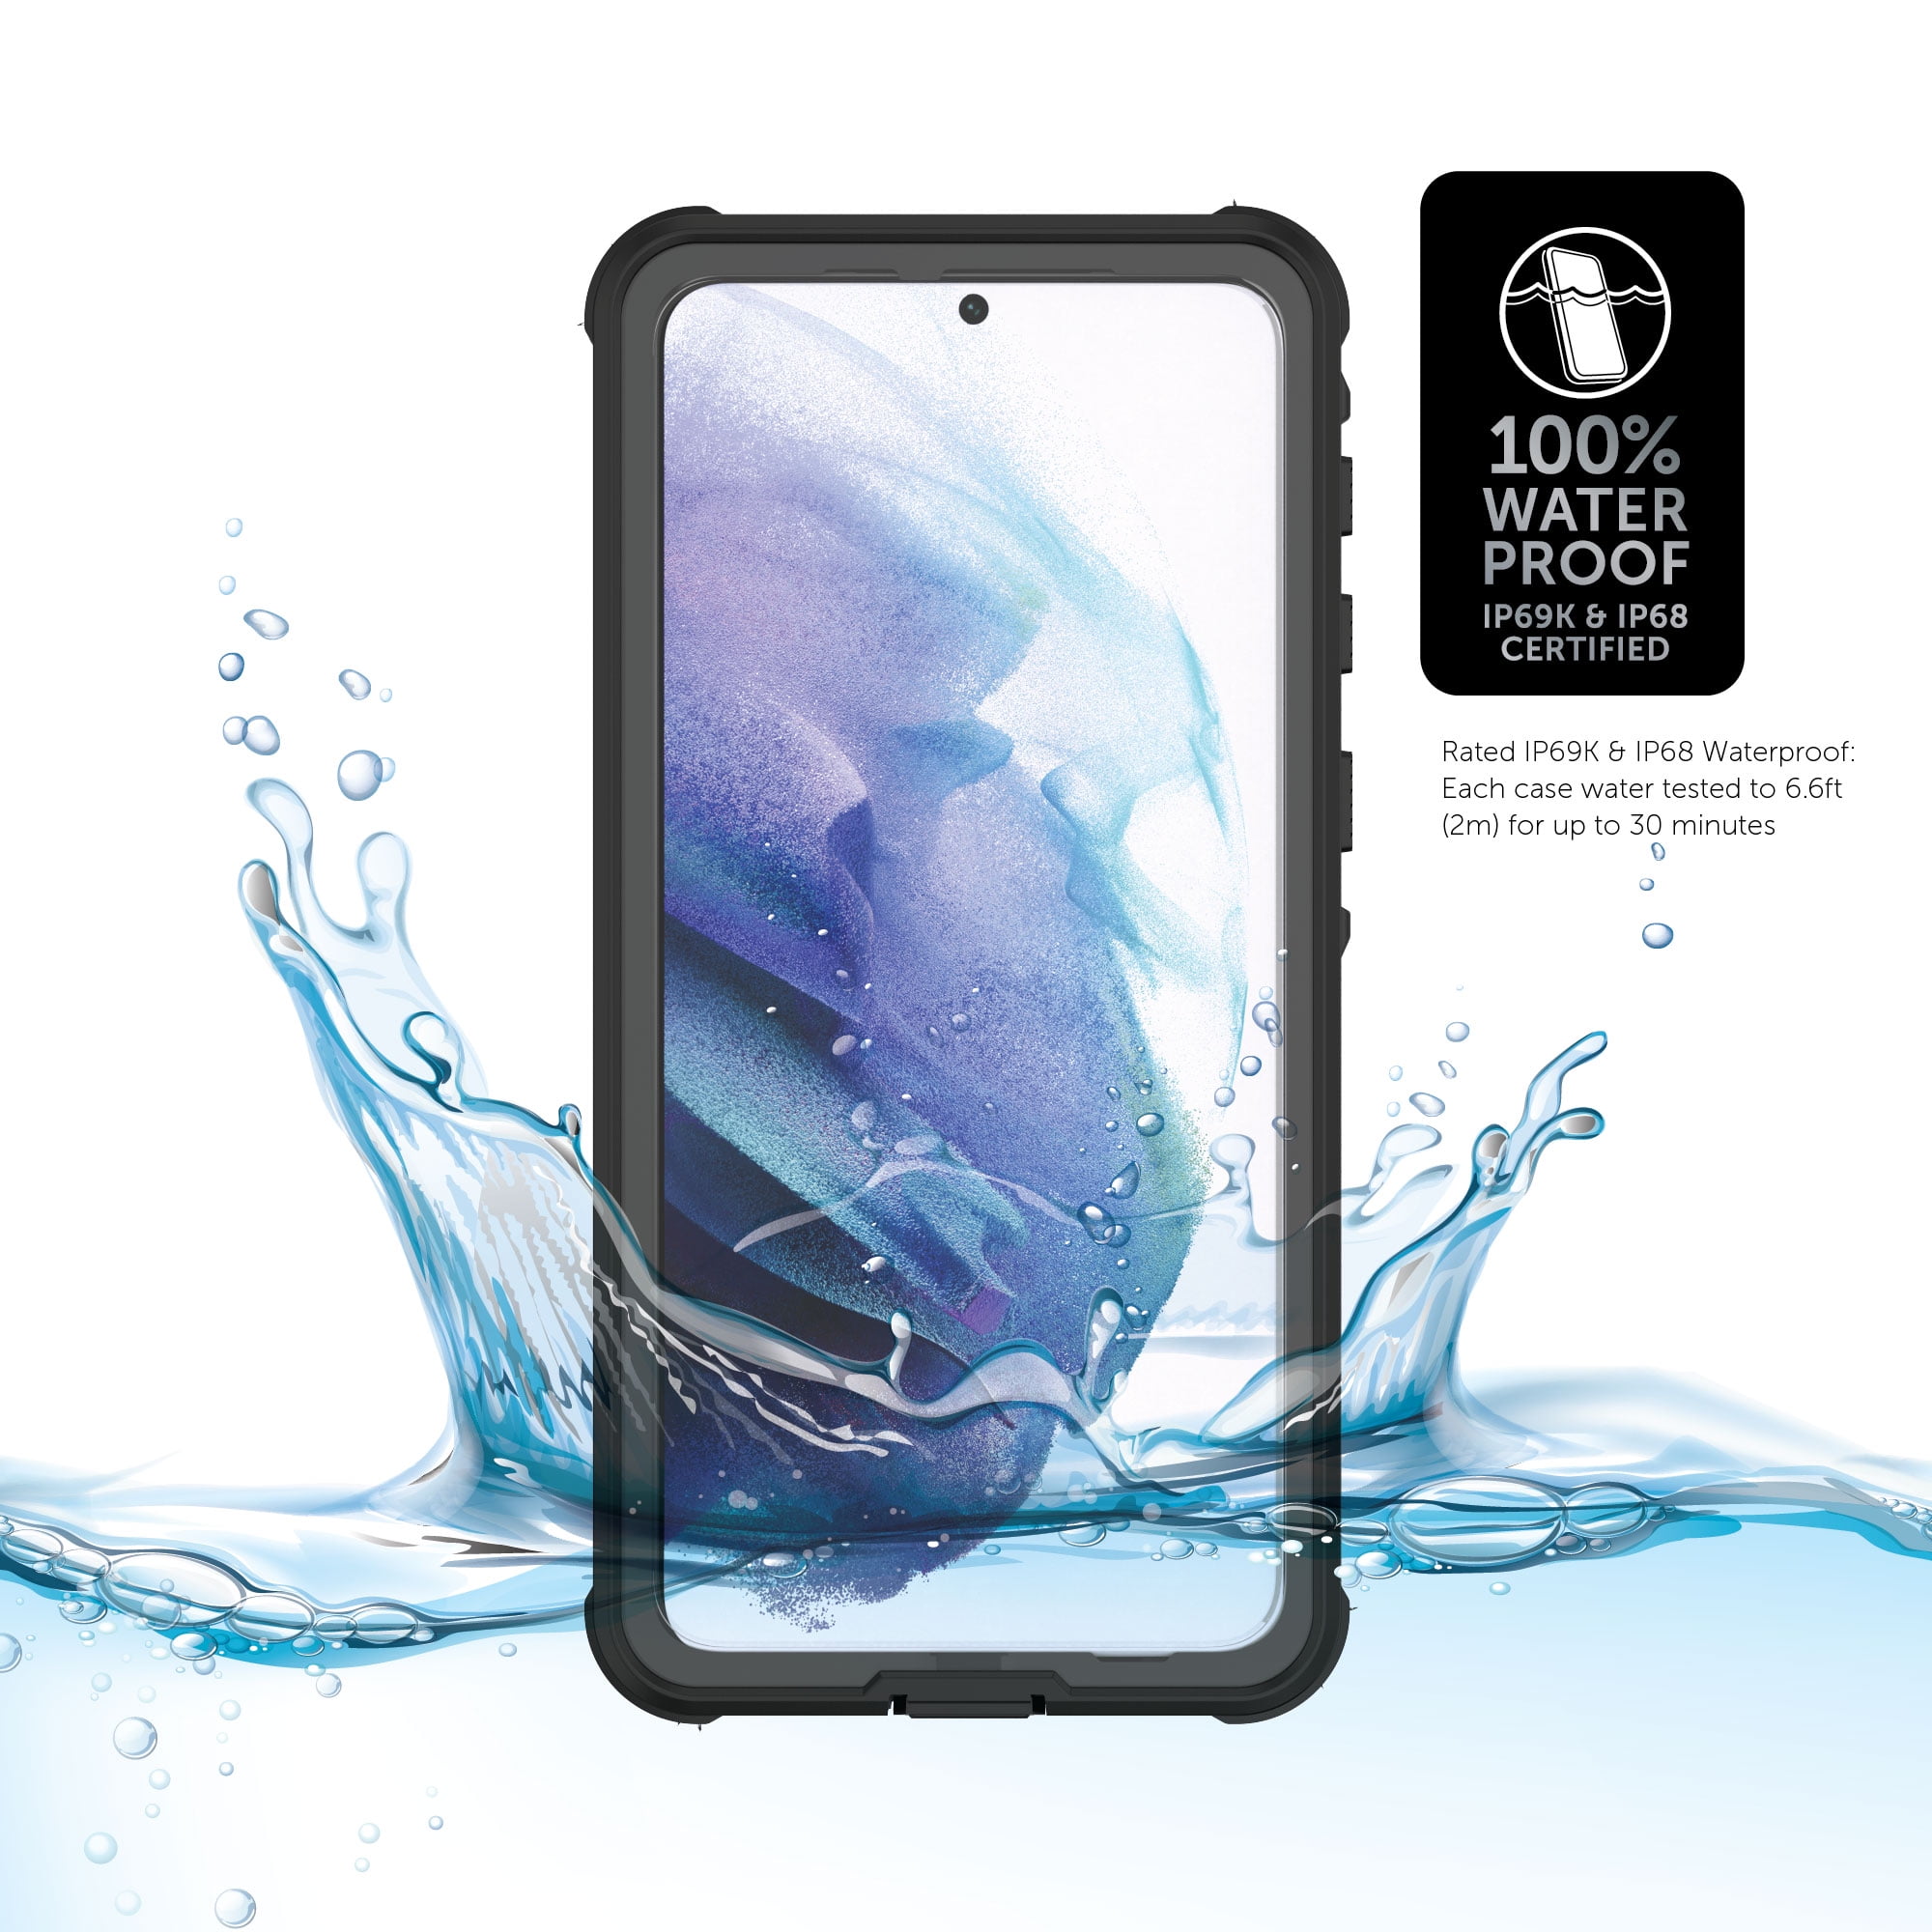 Samsung Galaxy S21+ 5G Body Glove Tidal Waterproof Phone Case, Clear/Black